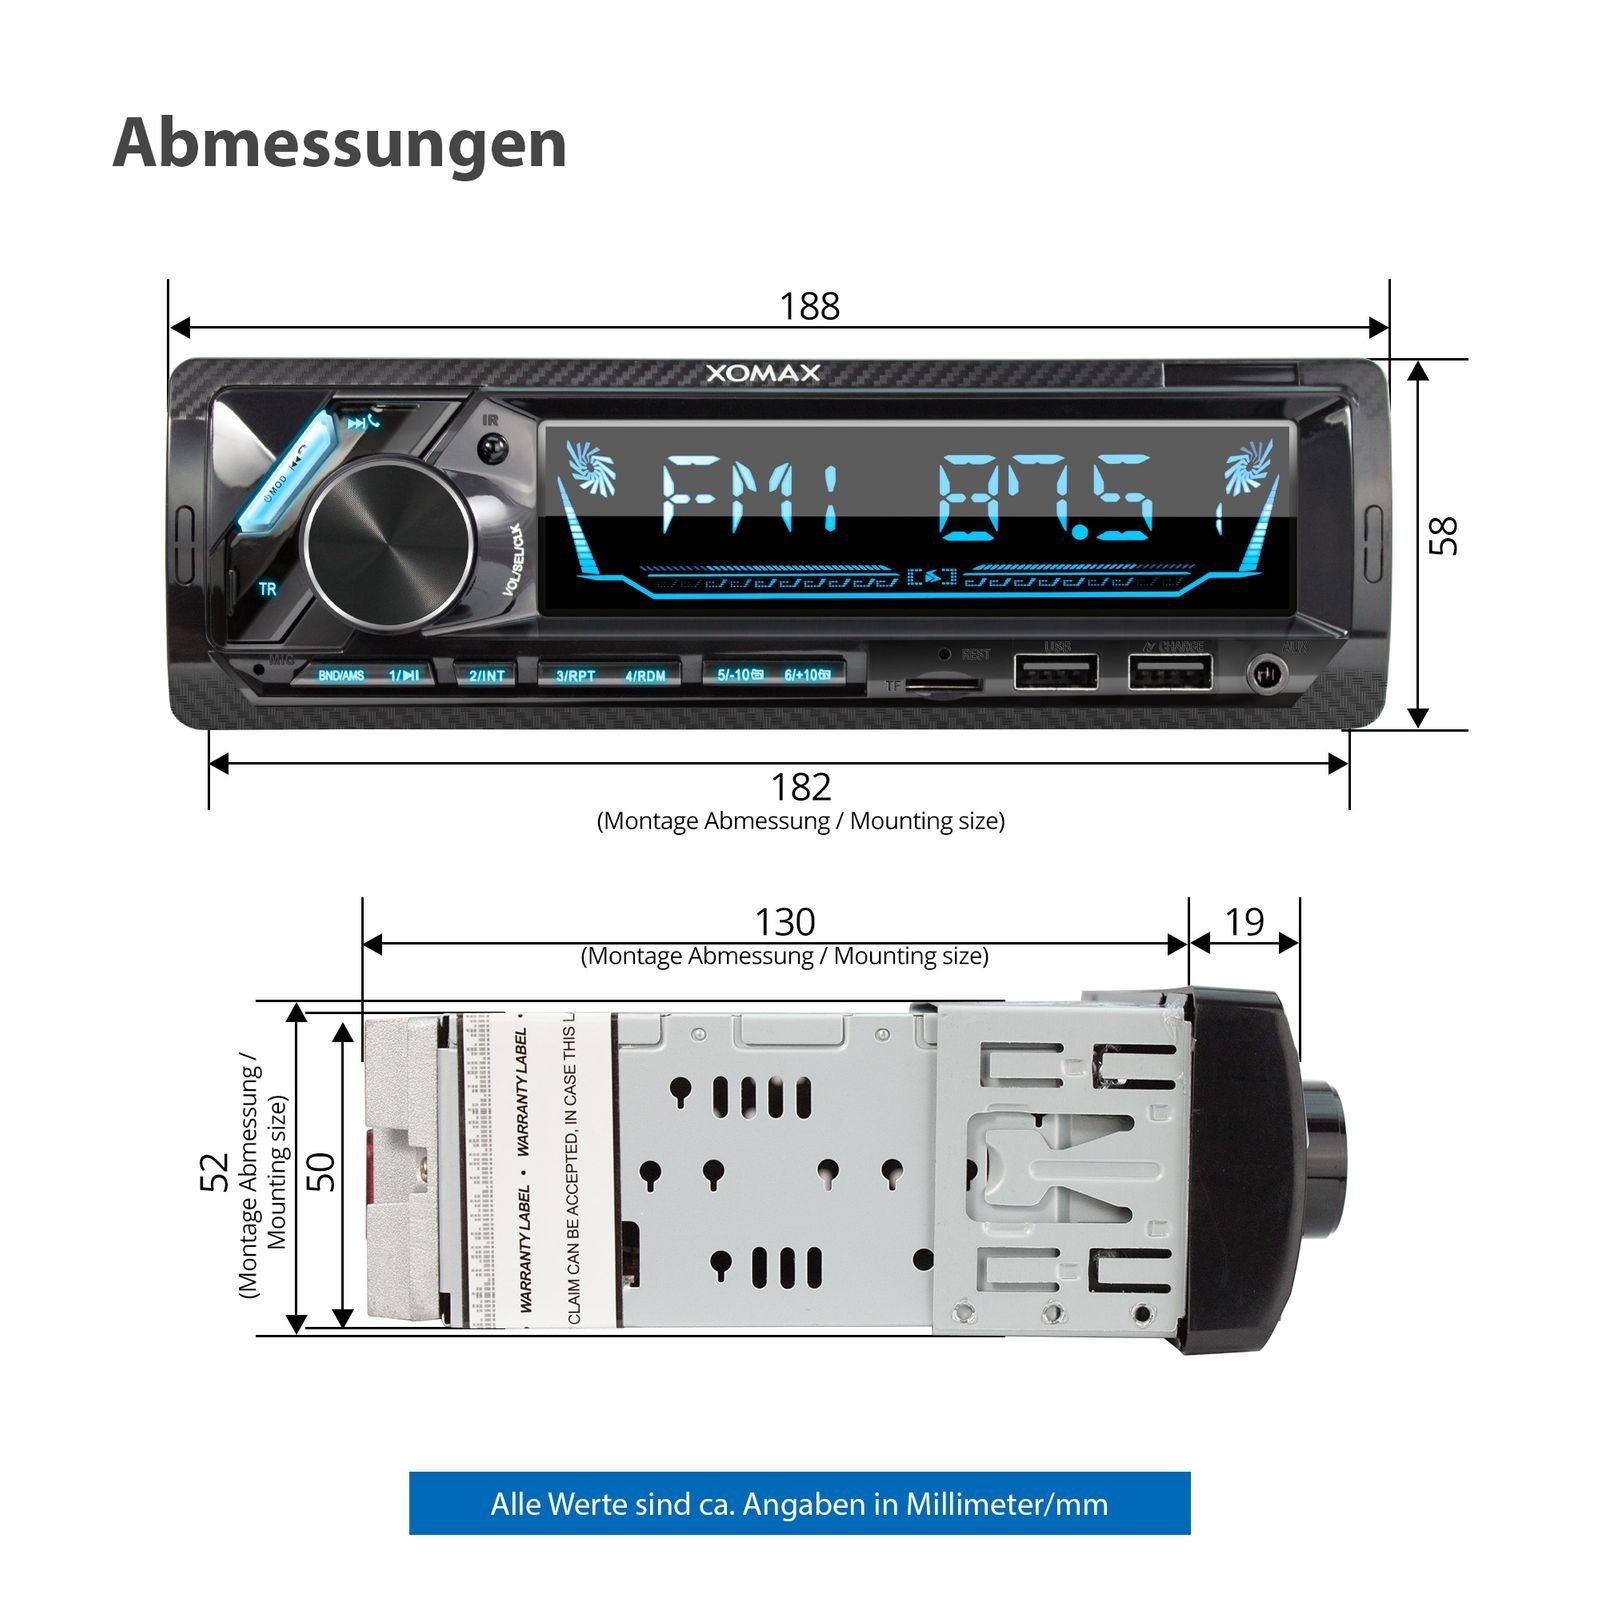 XOMAX Autoradio Bluetooth, 1 plus, XM-RD285 DIN Autoradio DAB+ USB, mit SD, 2x AUX,